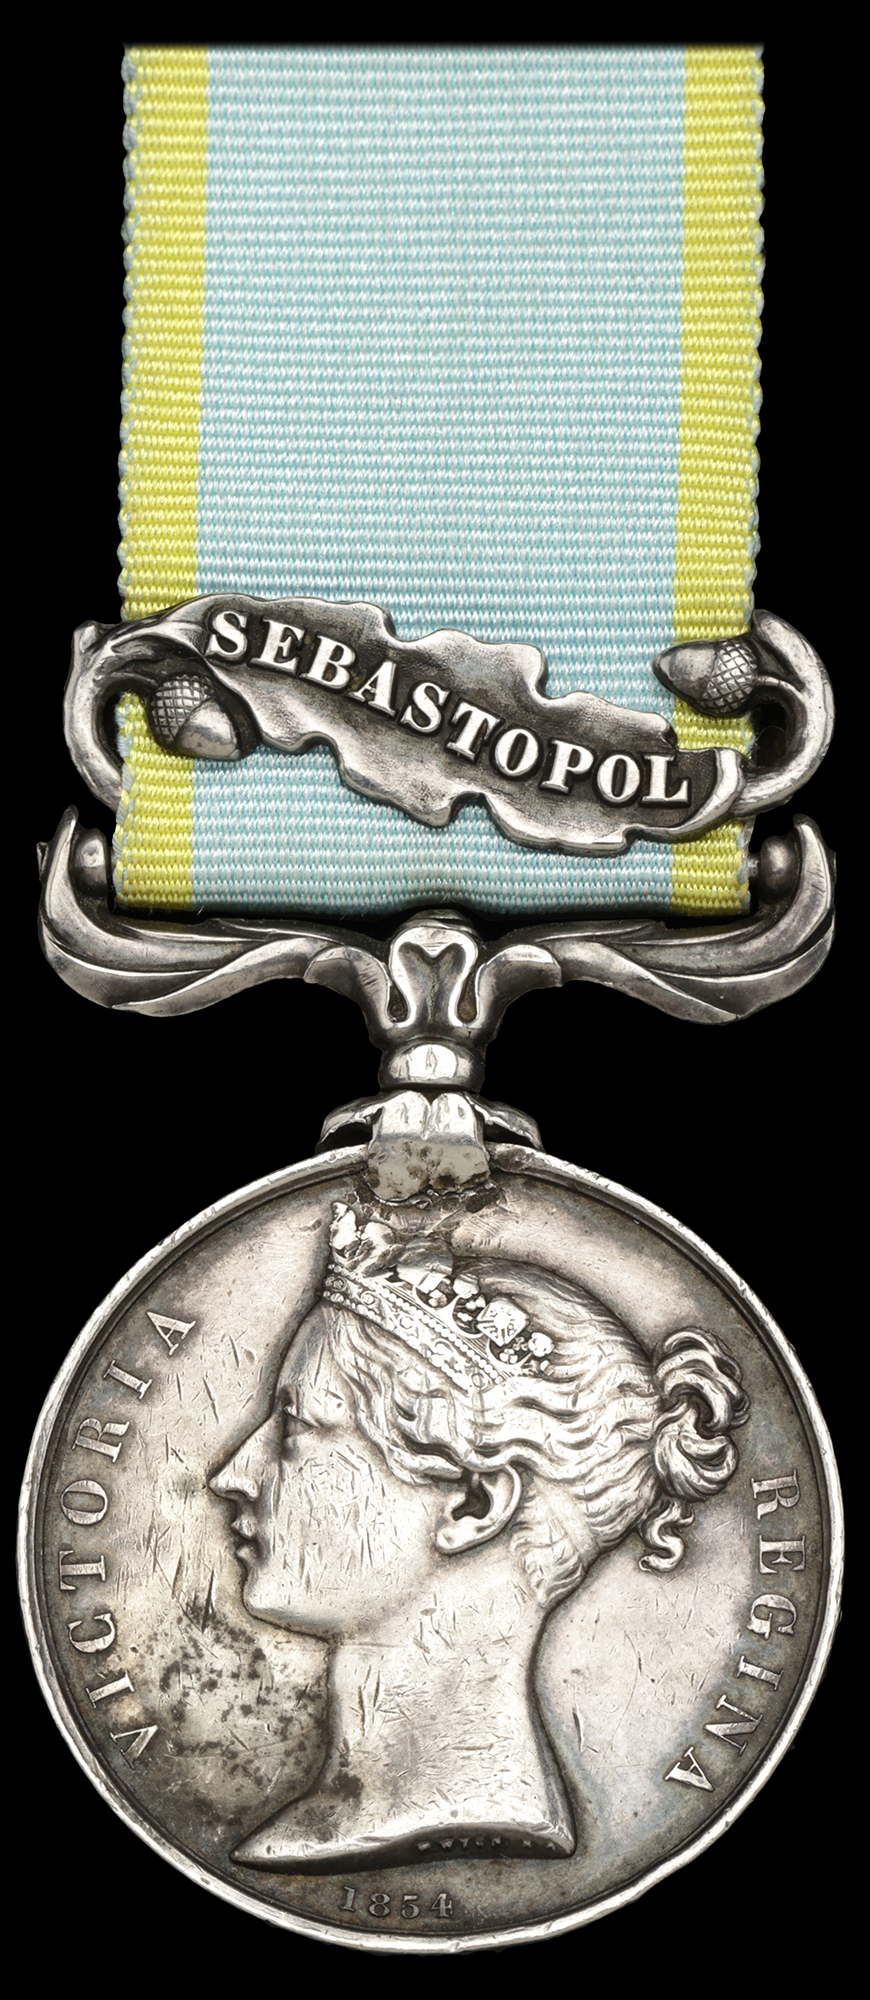 Crimea 1854-56, 1 clasp, Sebastopol (Gr. Dr. R. Mills. R.A.) contemporarily engraved naming,...